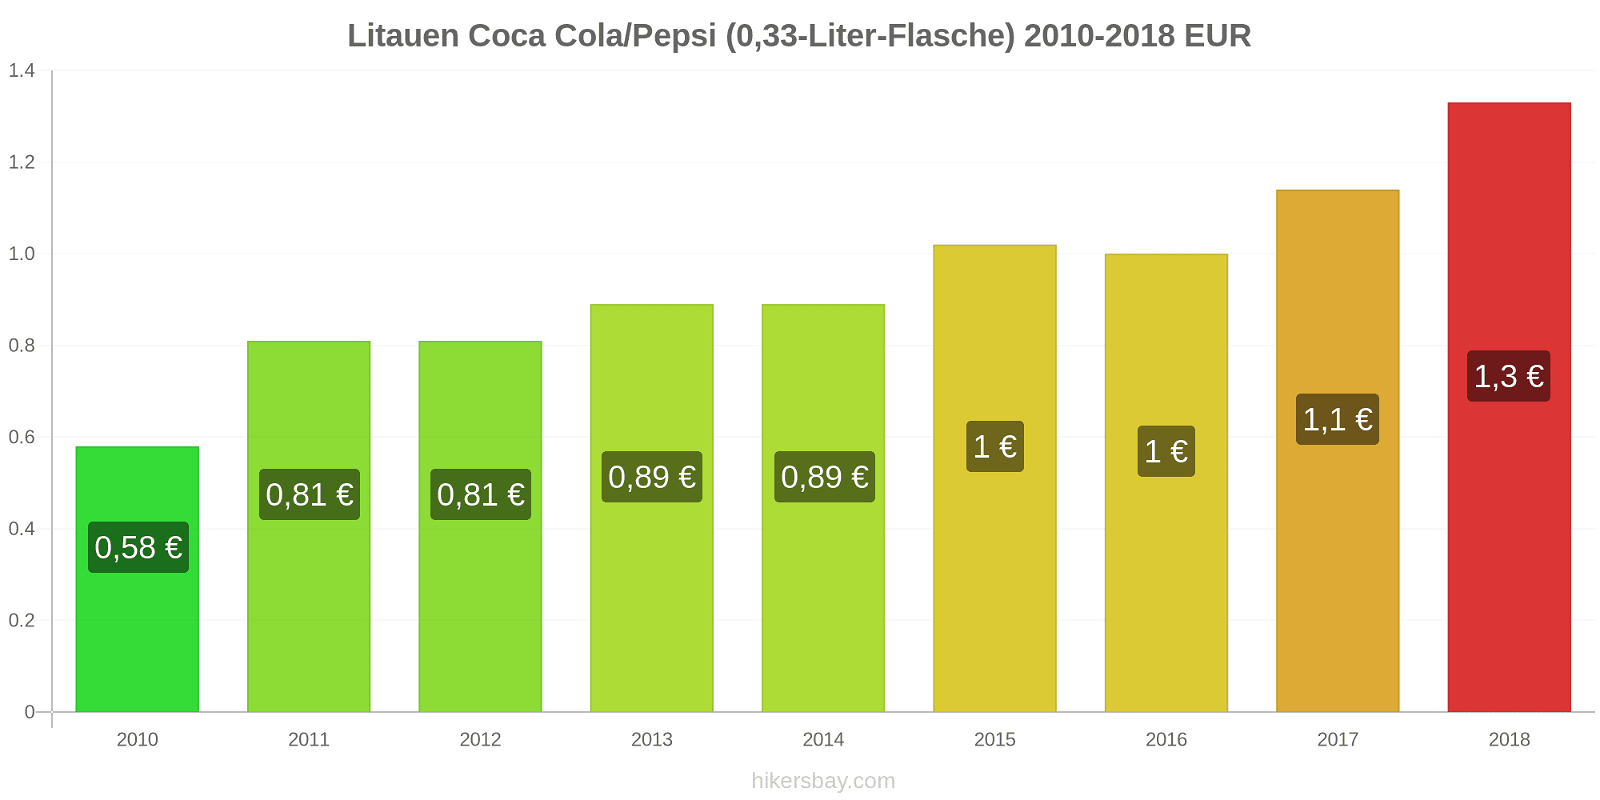 Litauen Preisänderungen Coke/Pepsi (0,33-Liter-Flasche) hikersbay.com